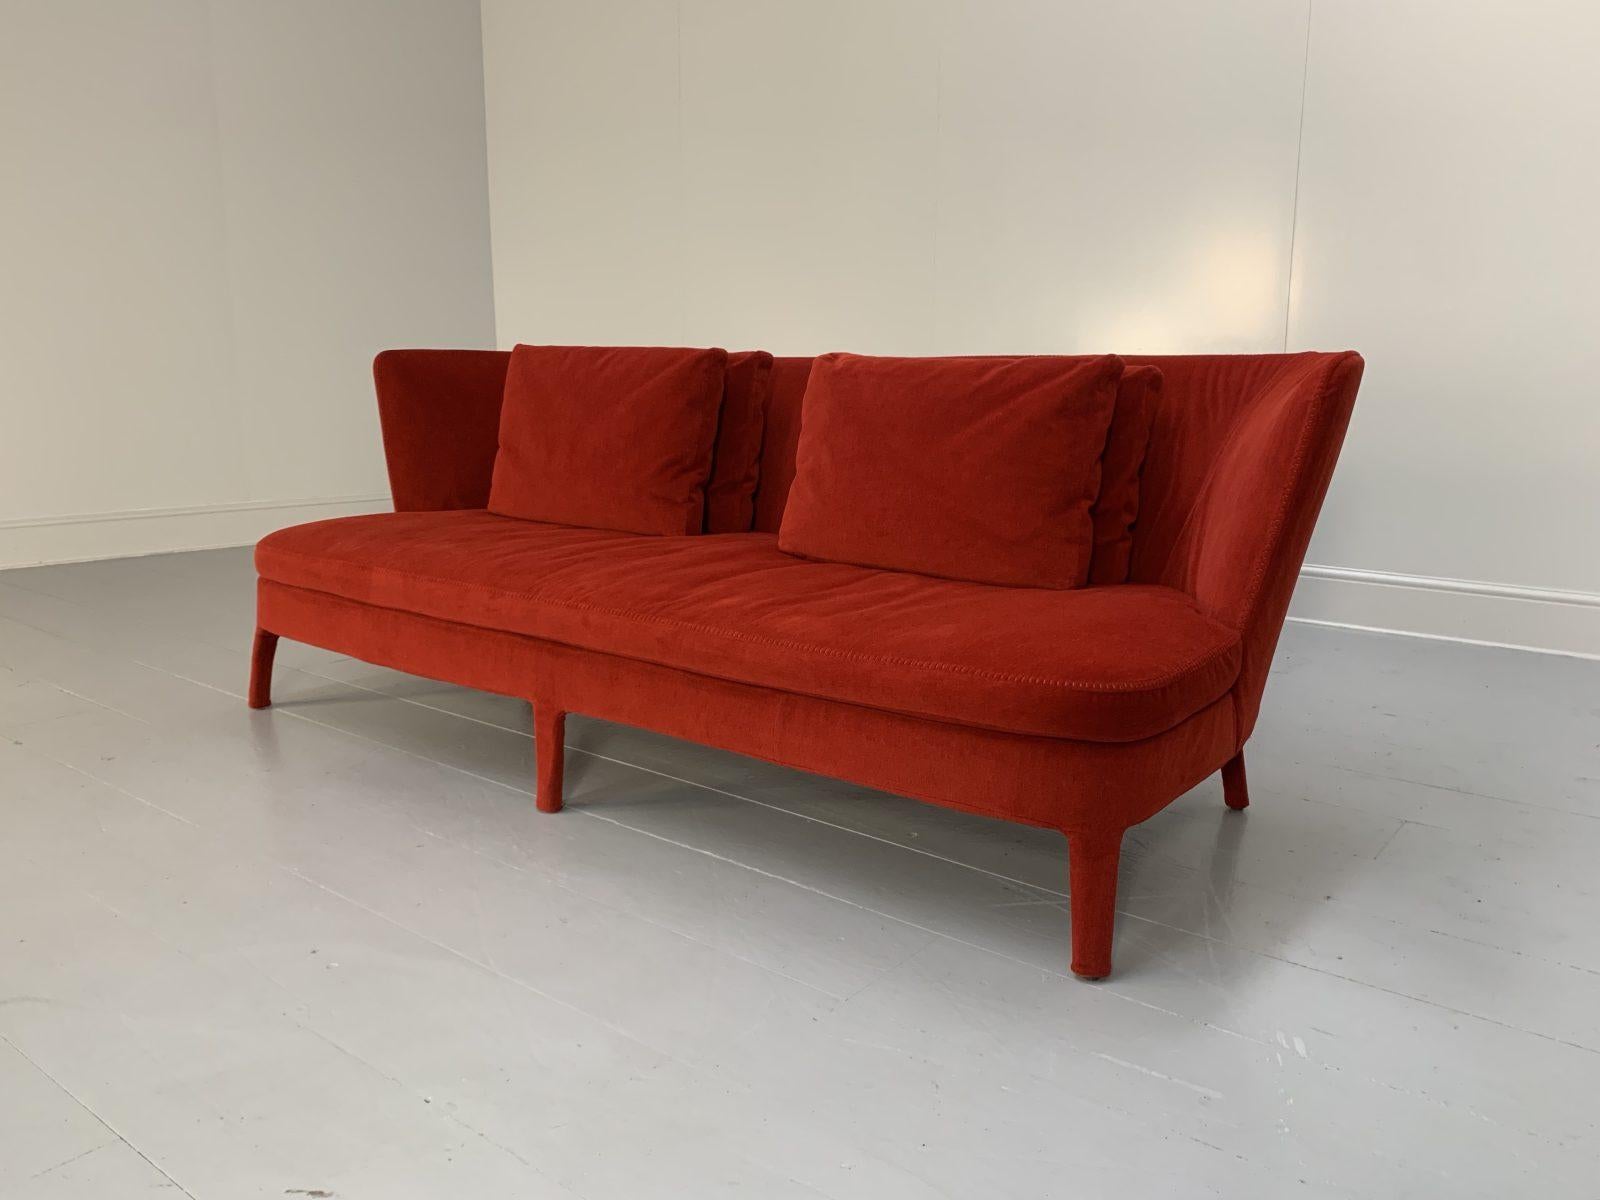 B&B Italia Sofa, “Maxalto Febo” 3-Seat, in Red Velvet In Good Condition For Sale In Barrowford, GB